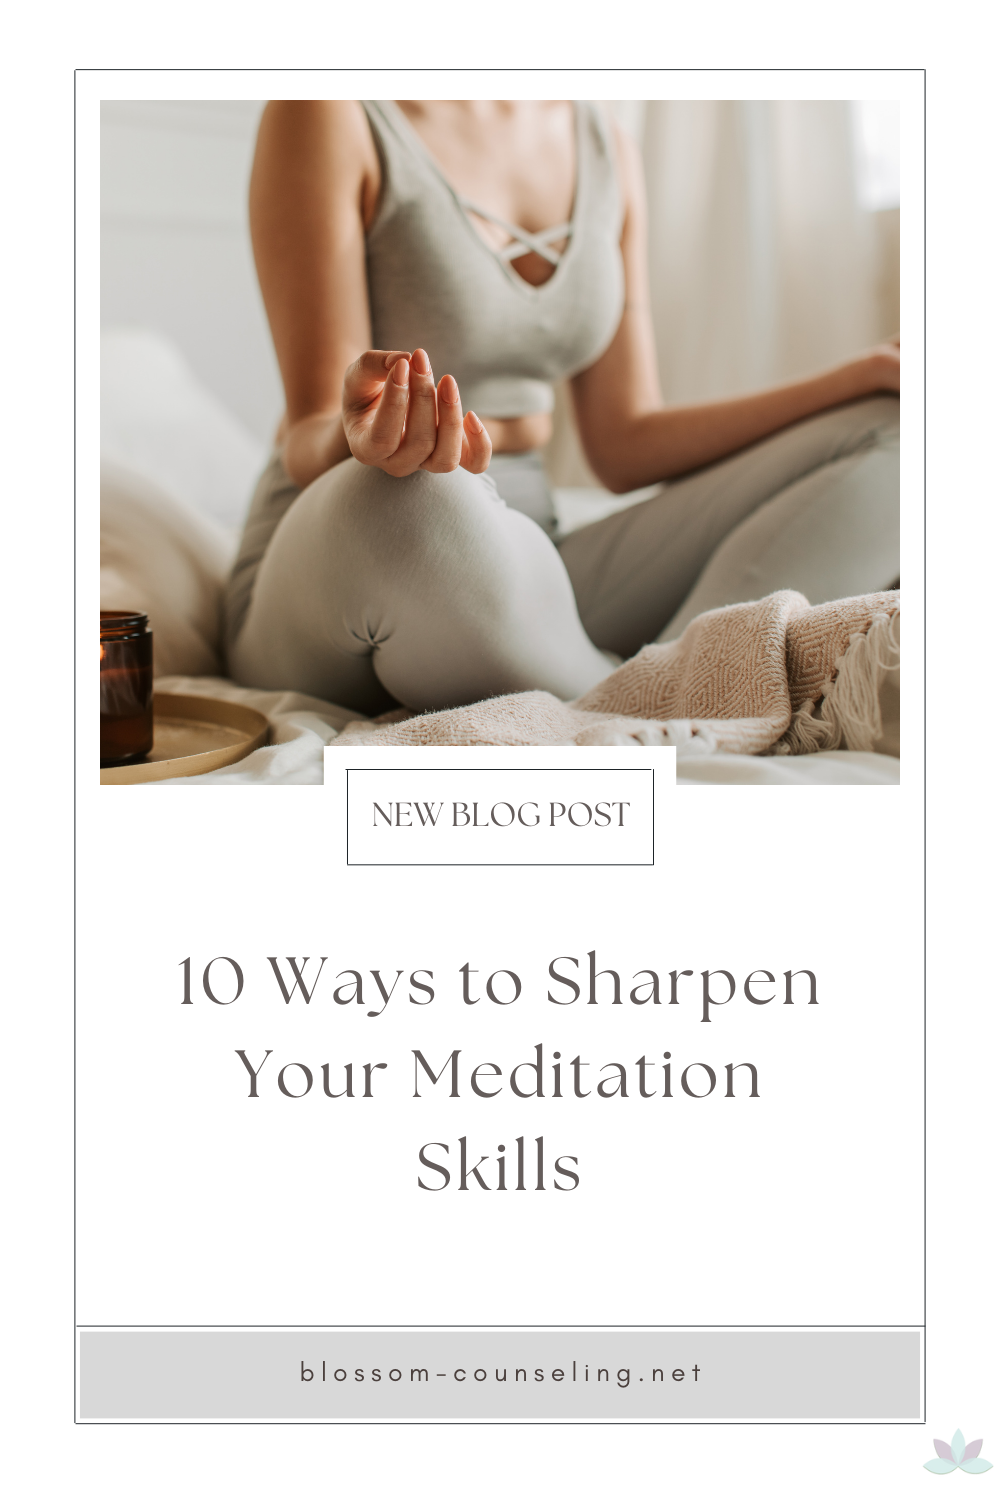 10 Ways to Sharpen Your Meditation Skills